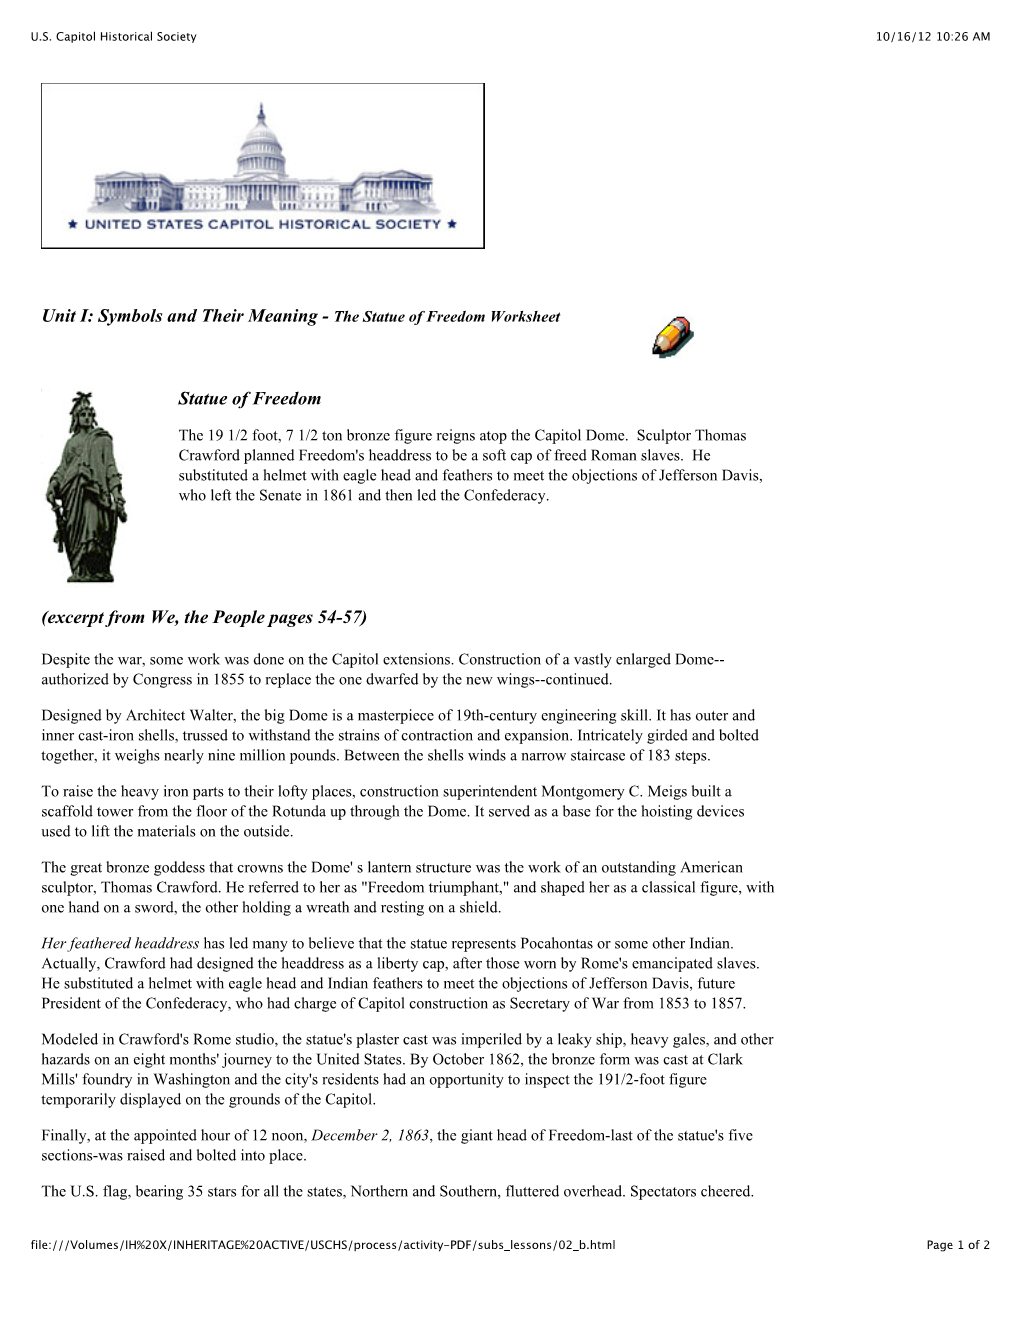 Statue of Freedom – Worksheet